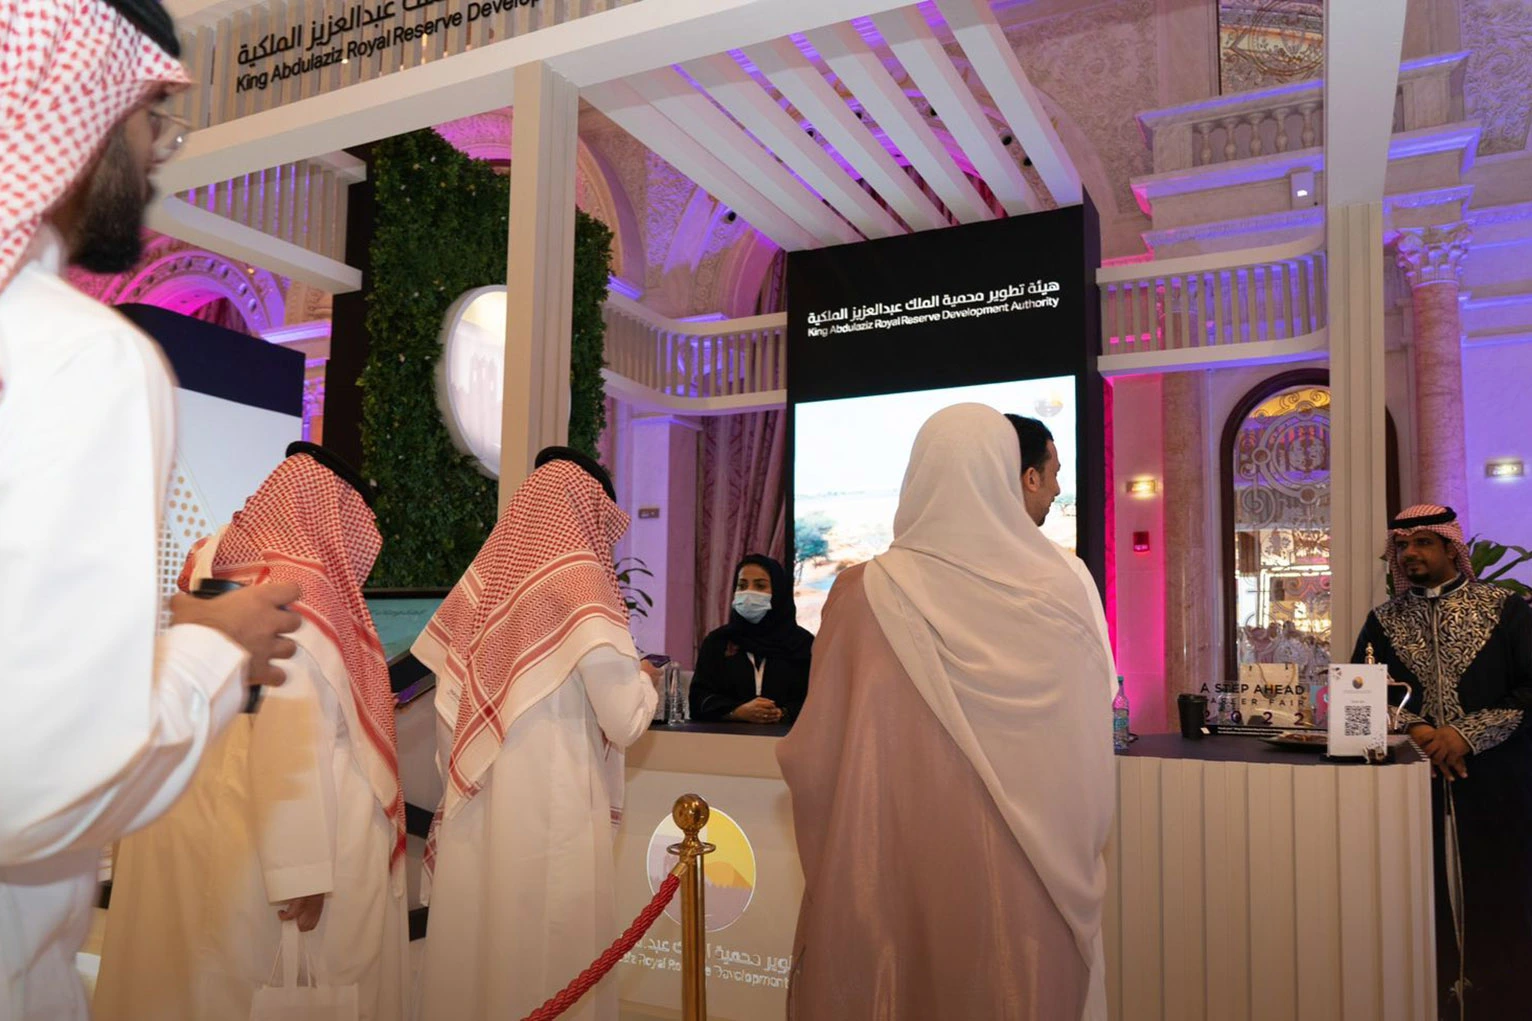 King Abdulaziz Royal Reserve Authority Recruitment Booth at Khatwa Exhibition